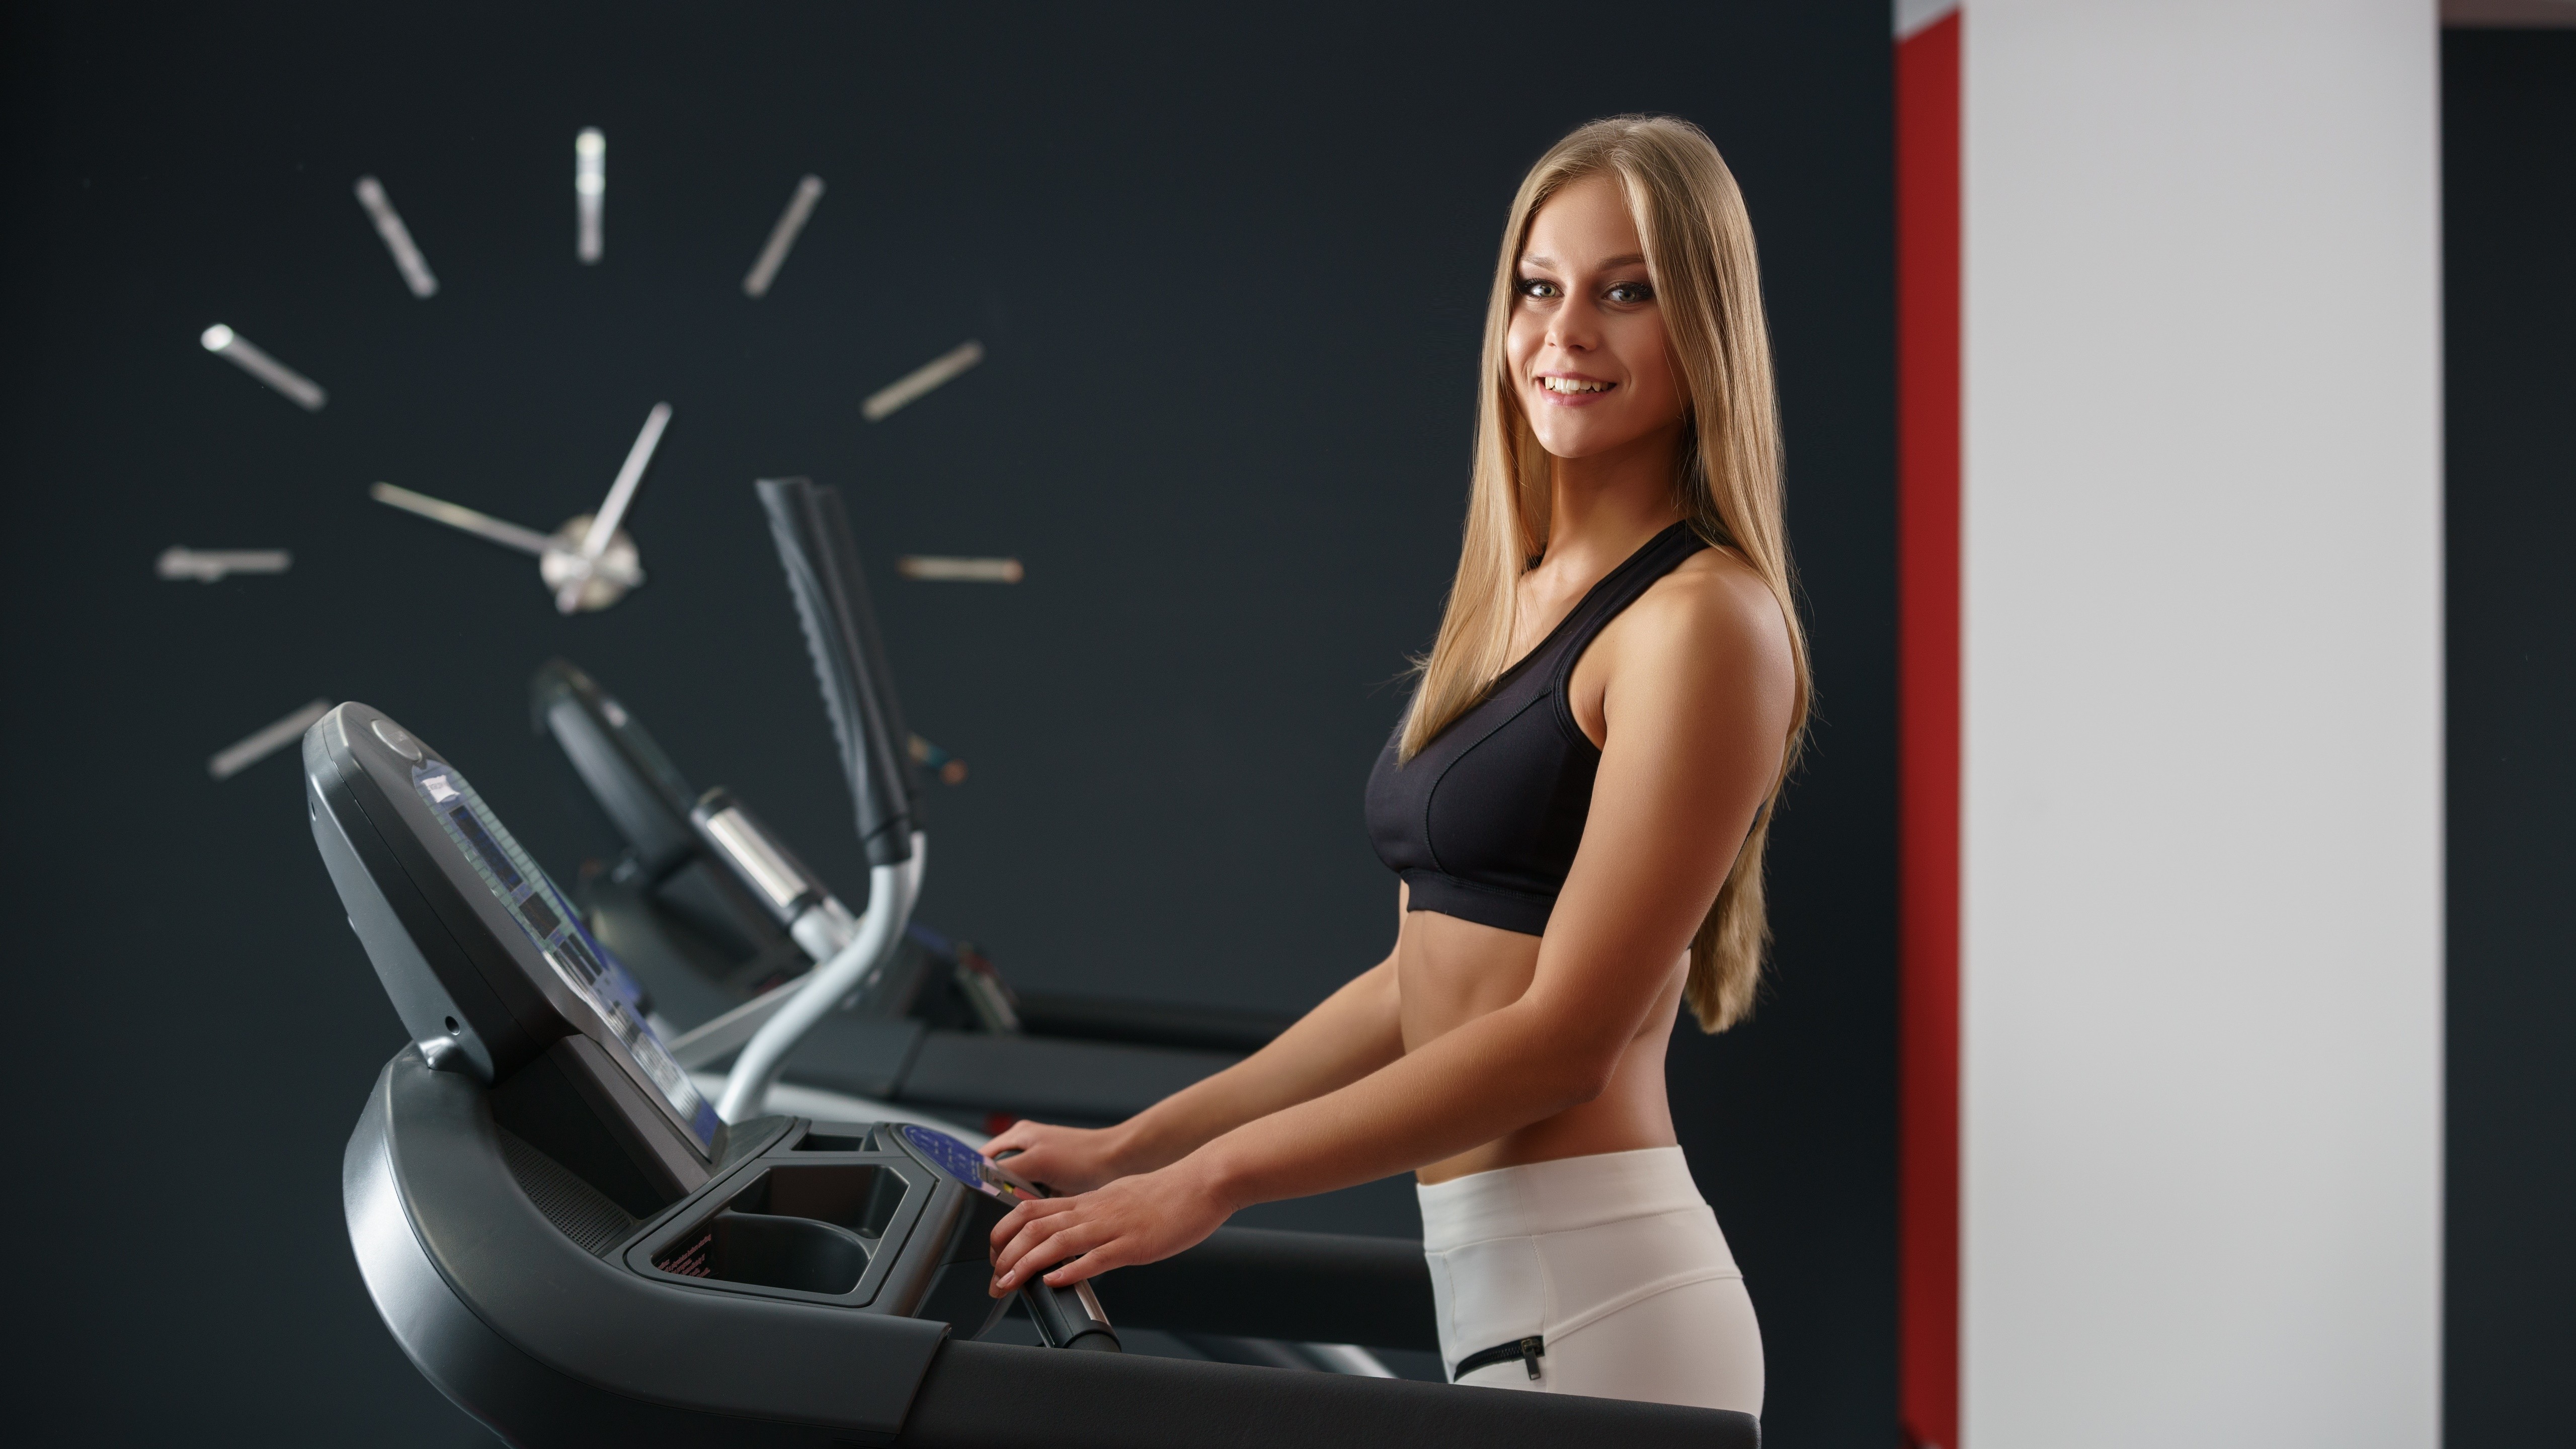 People 5120x2880 treadmills smiling blonde clocks gyms fitness model women